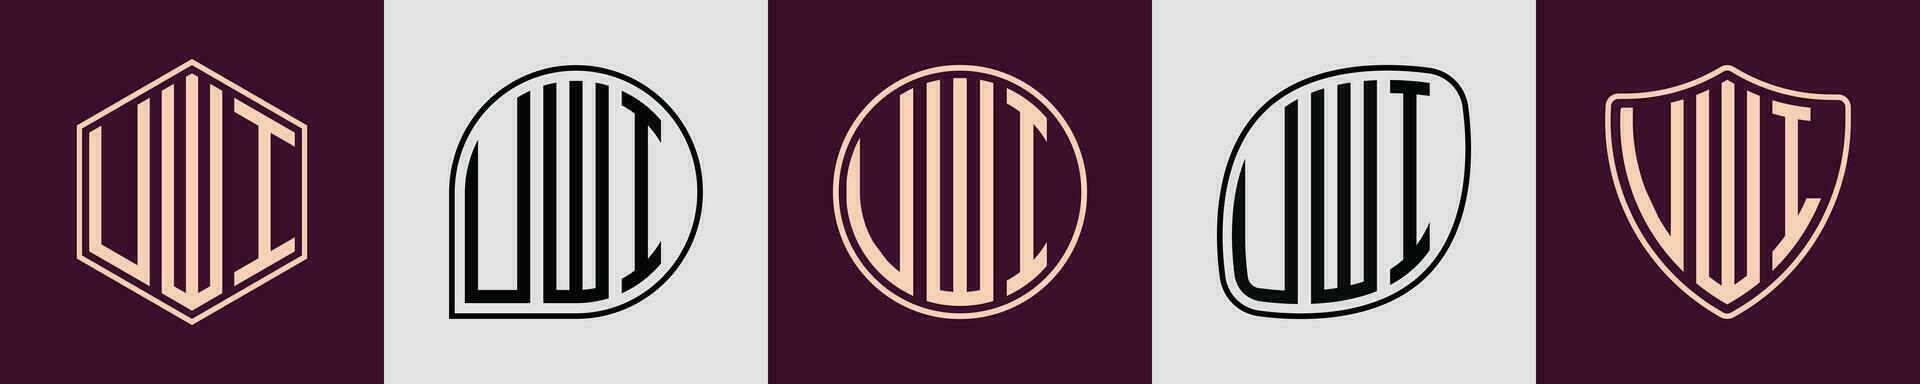 kreativ einfach Initiale Monogramm Uwi Logo Entwürfe. vektor